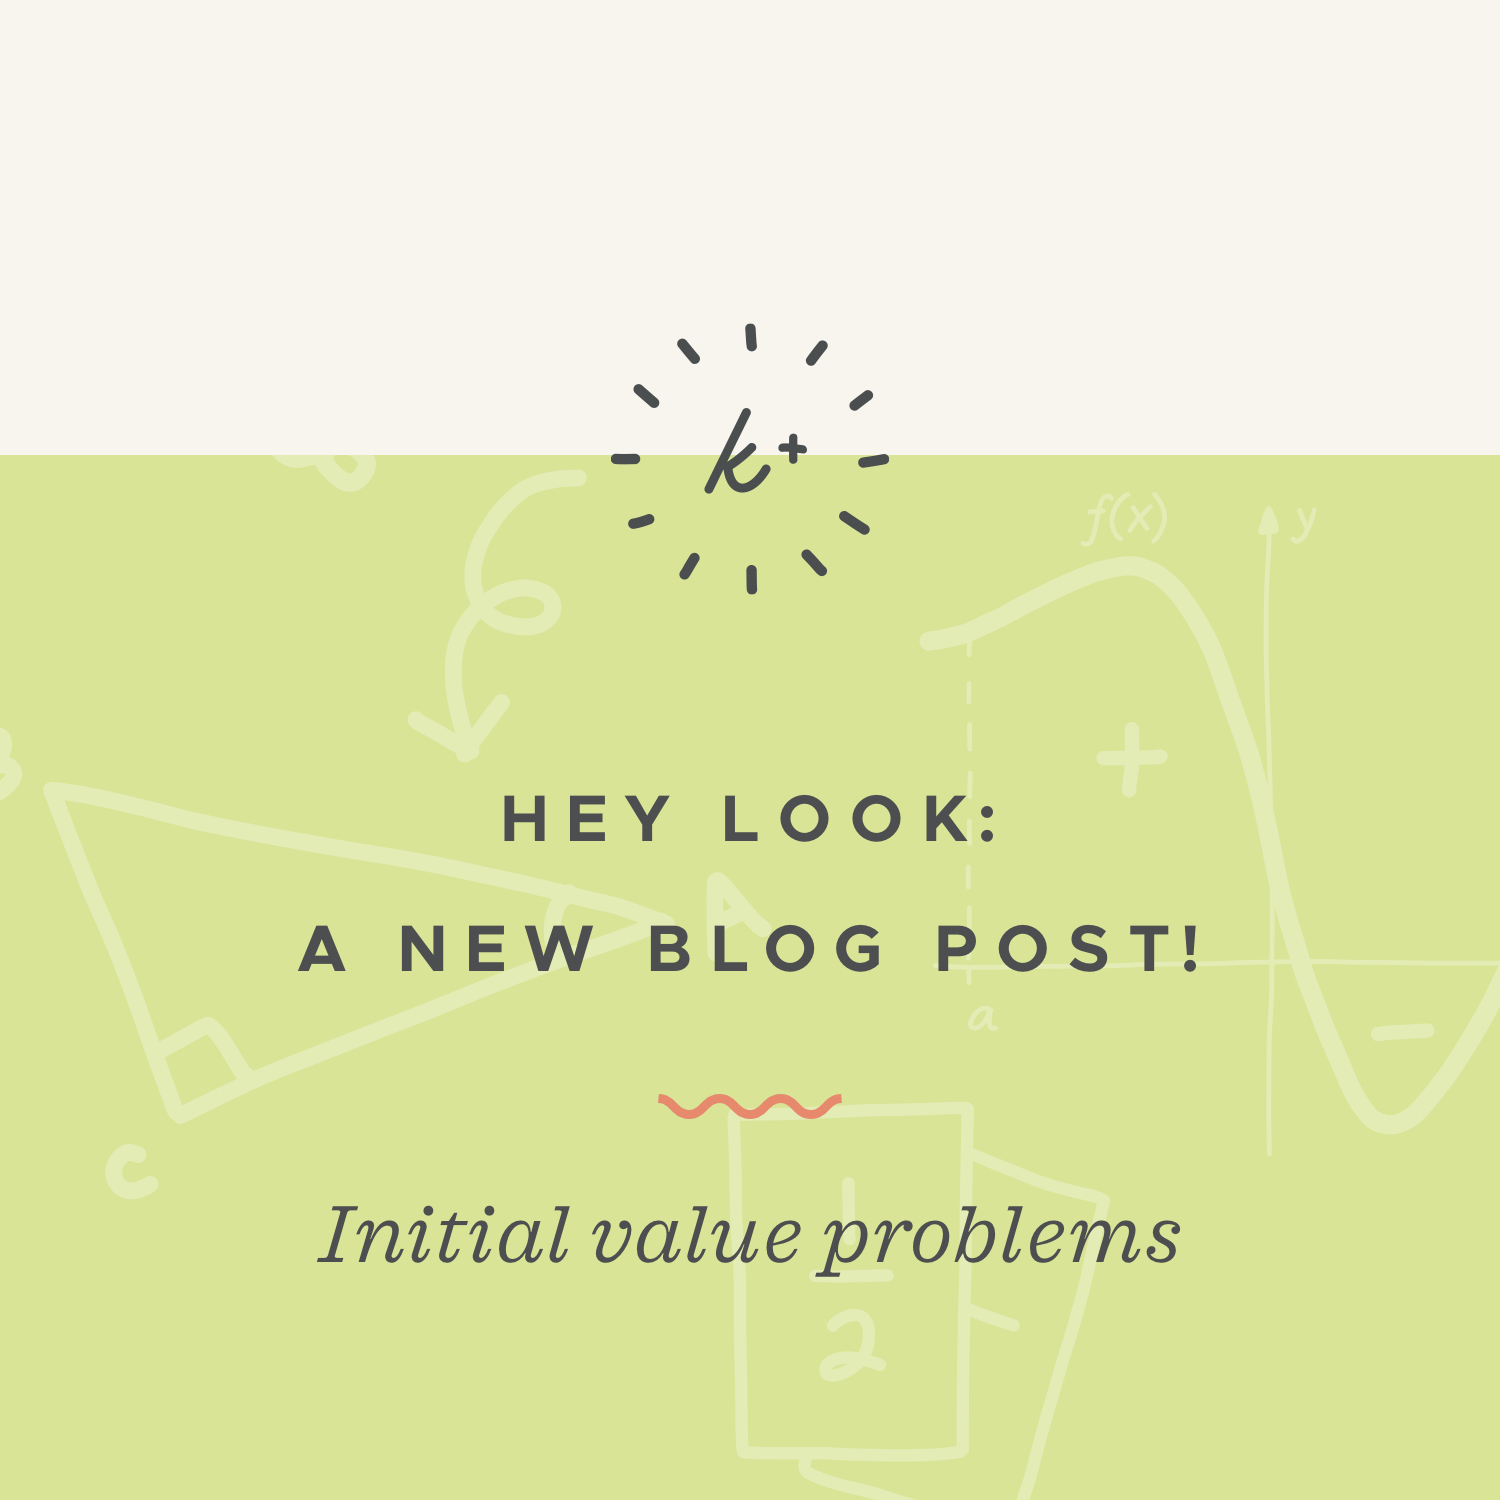 Initial value problems blog post.jpeg